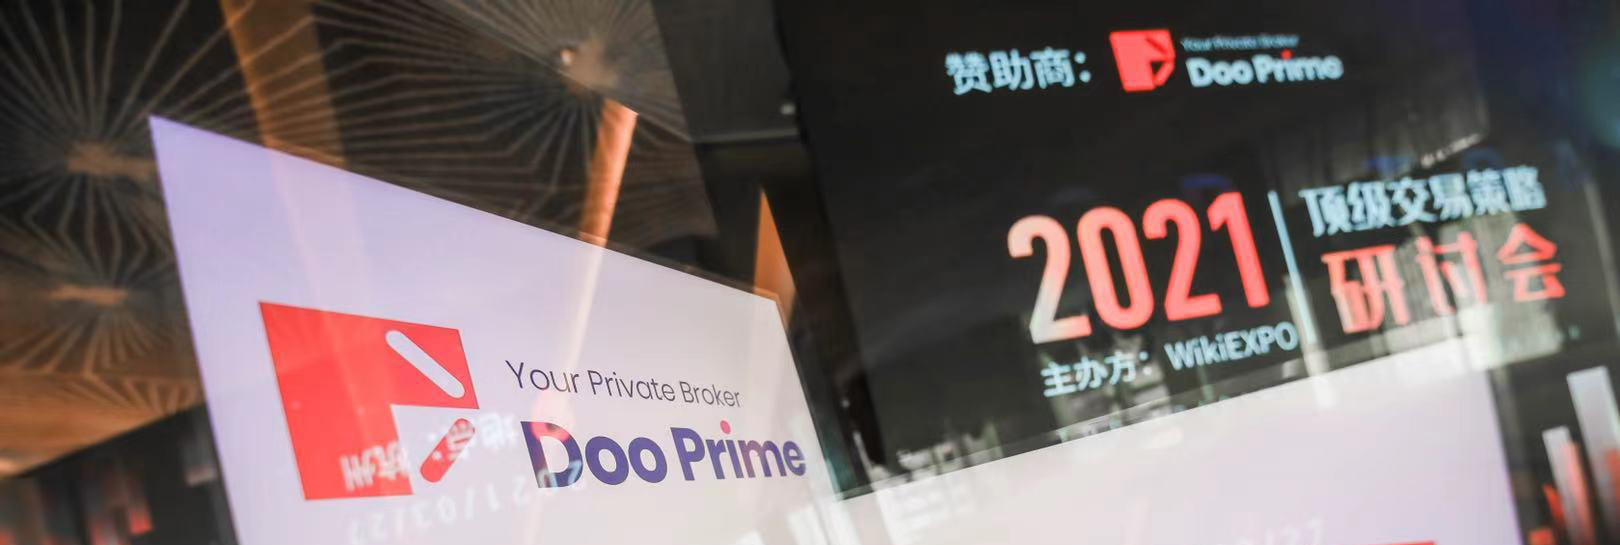 Doo Prime 赞助 WikiEXPO「2021顶级交易策略研讨会」圆满结束